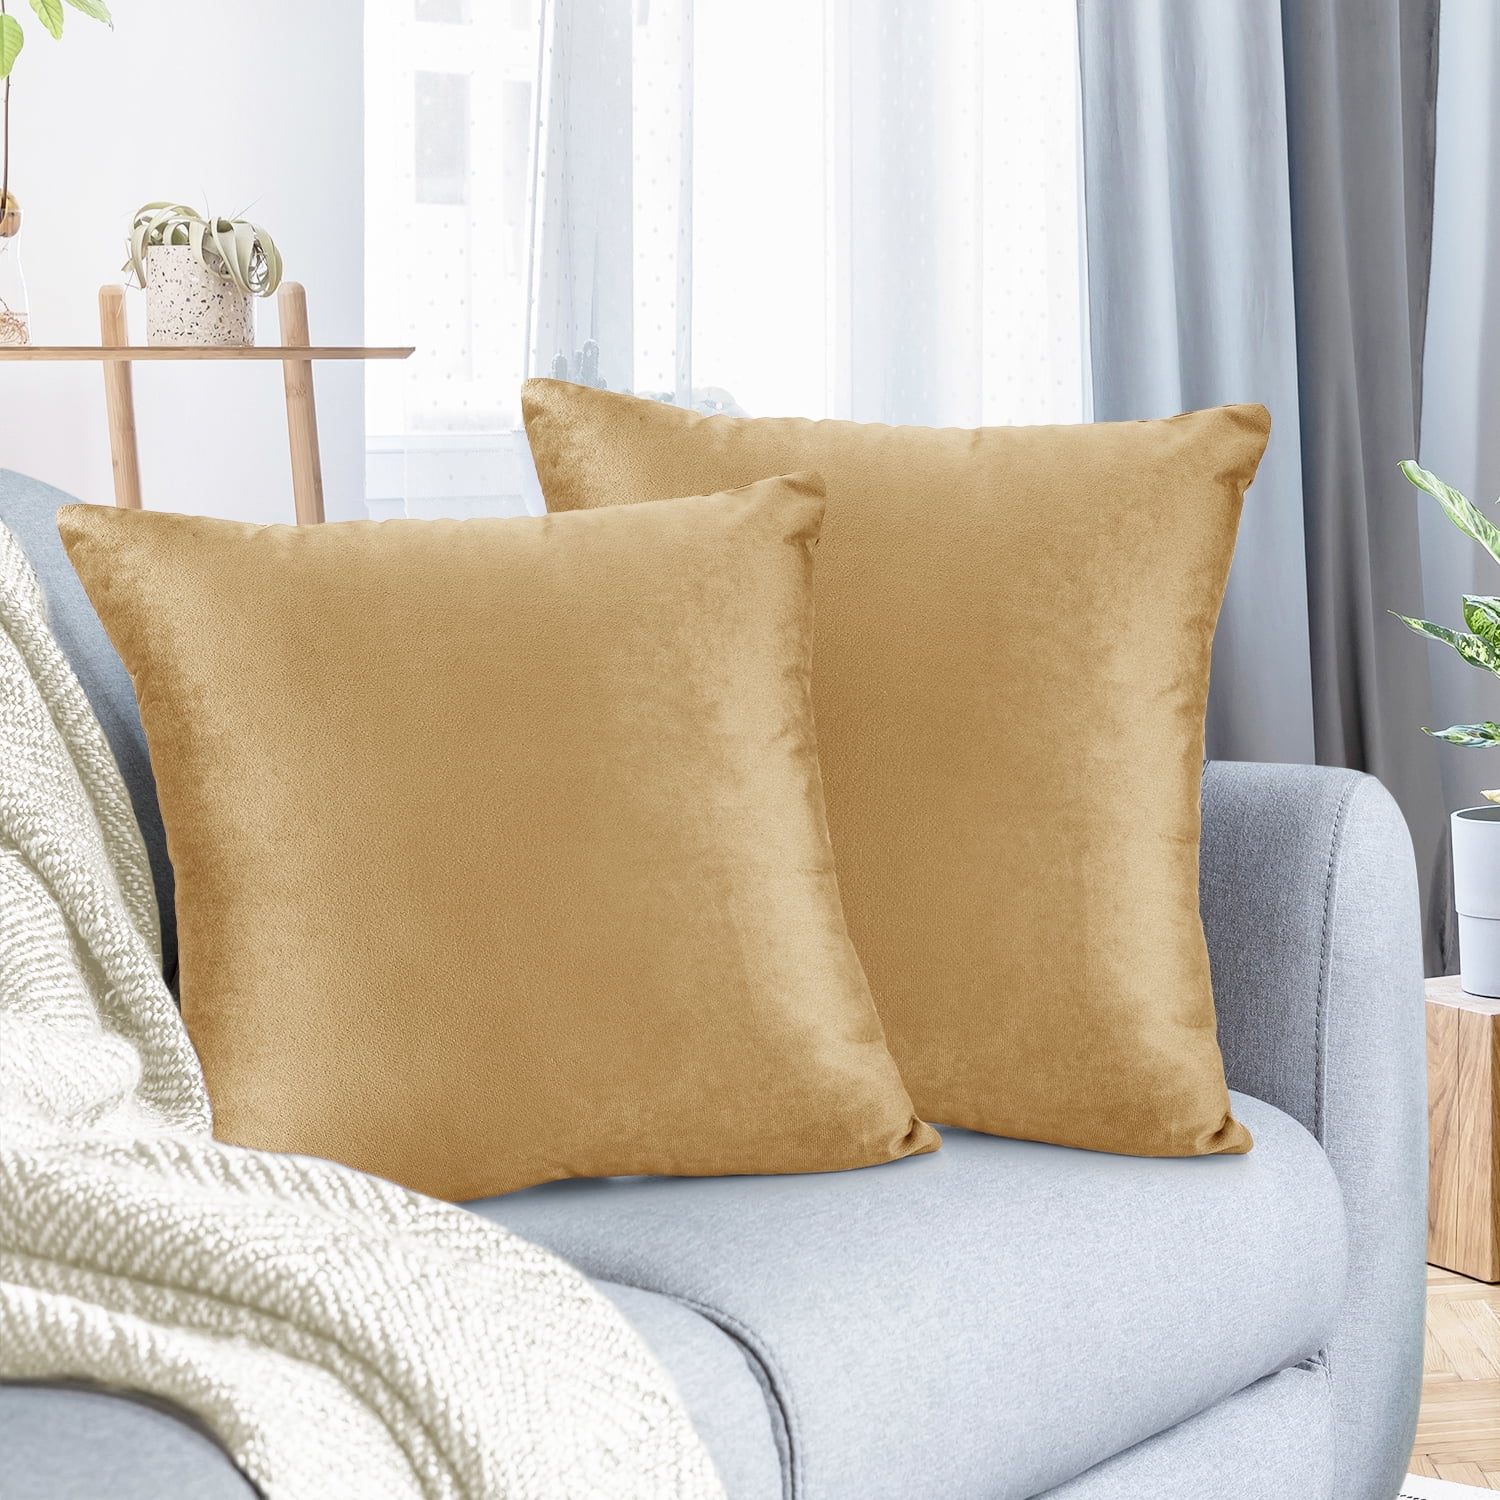 18x18 in Soft Chenille Geometric Home Decor Cushion Cover Square Pillow Case S*d 